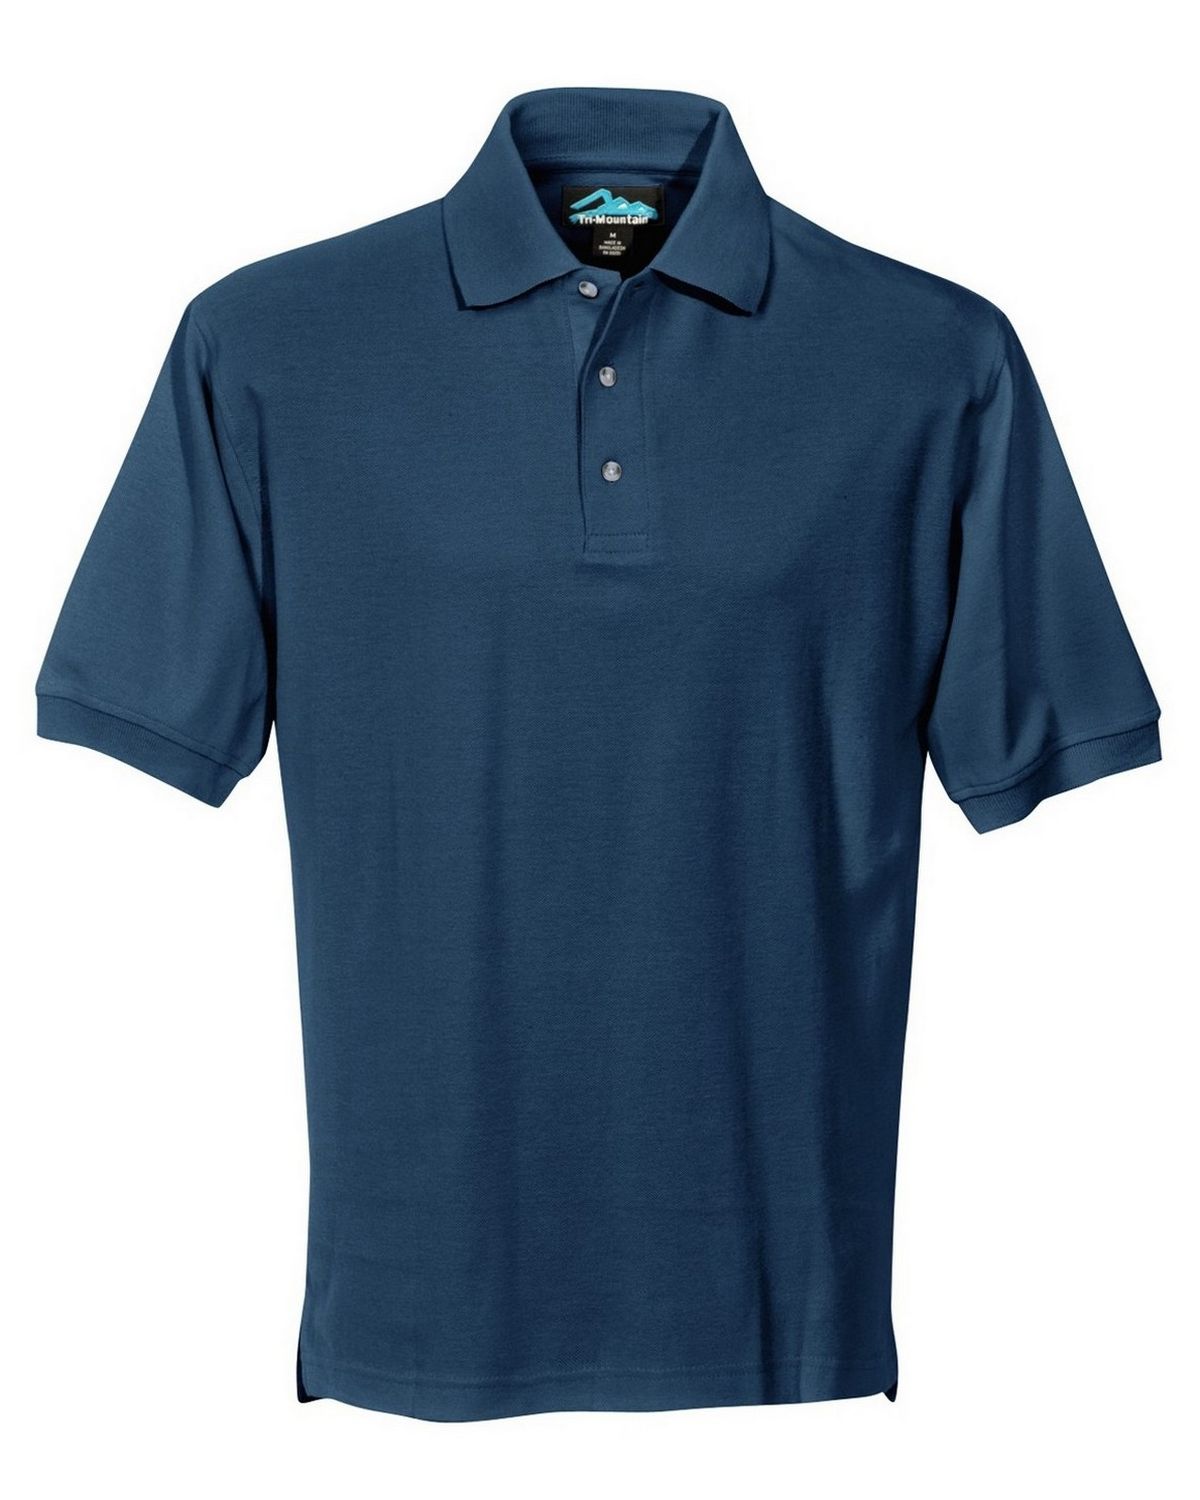 Buy Tri-Mountain 168 Signature Cotton Pique Golf Shirt